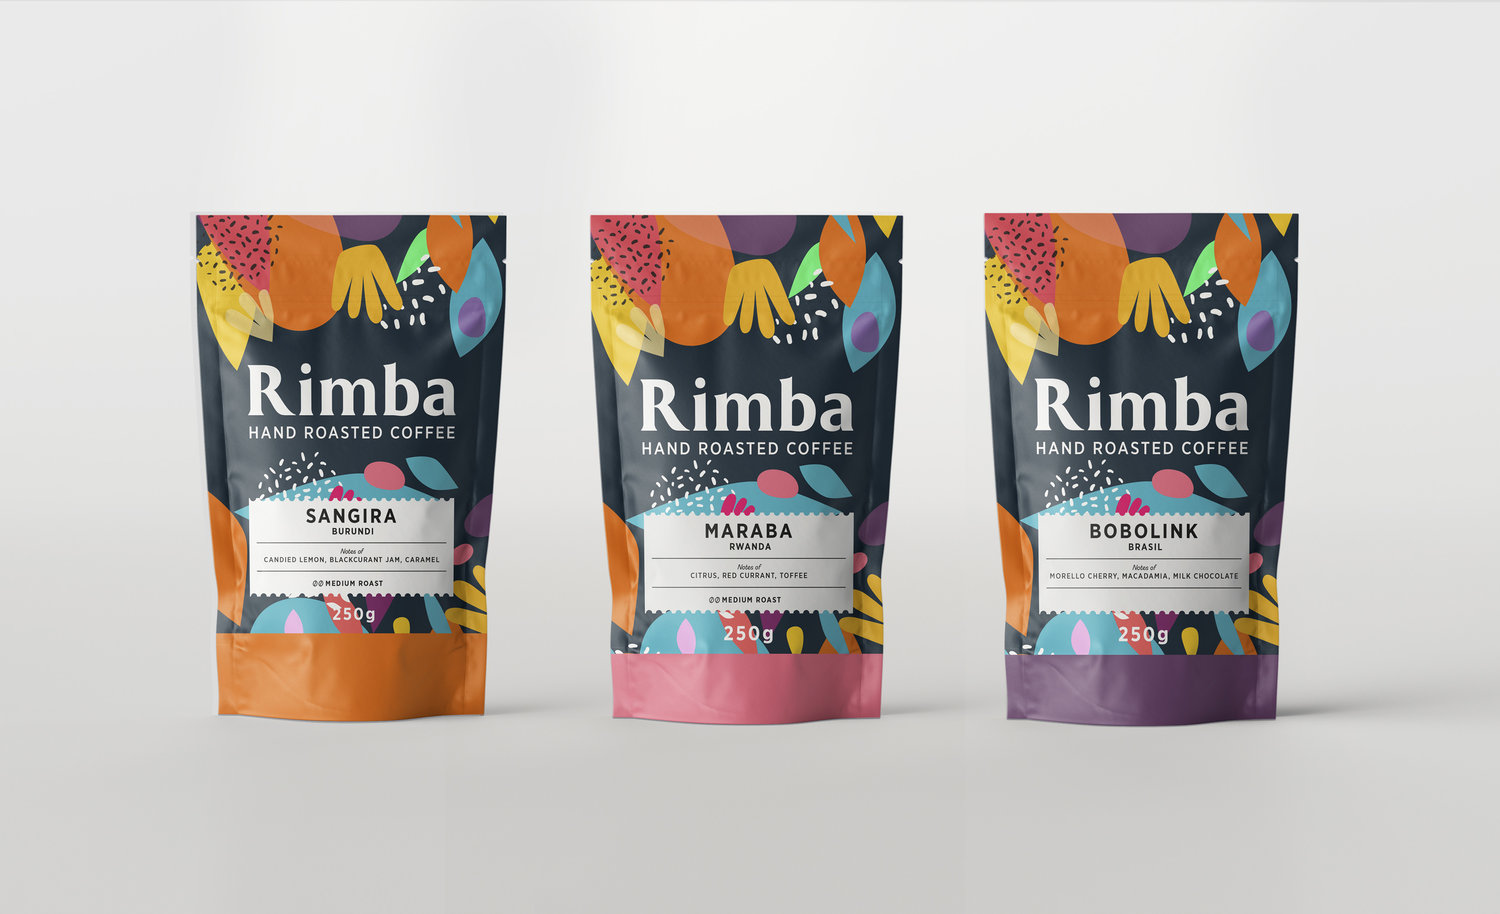 Rimba Hand Roasted Coffee